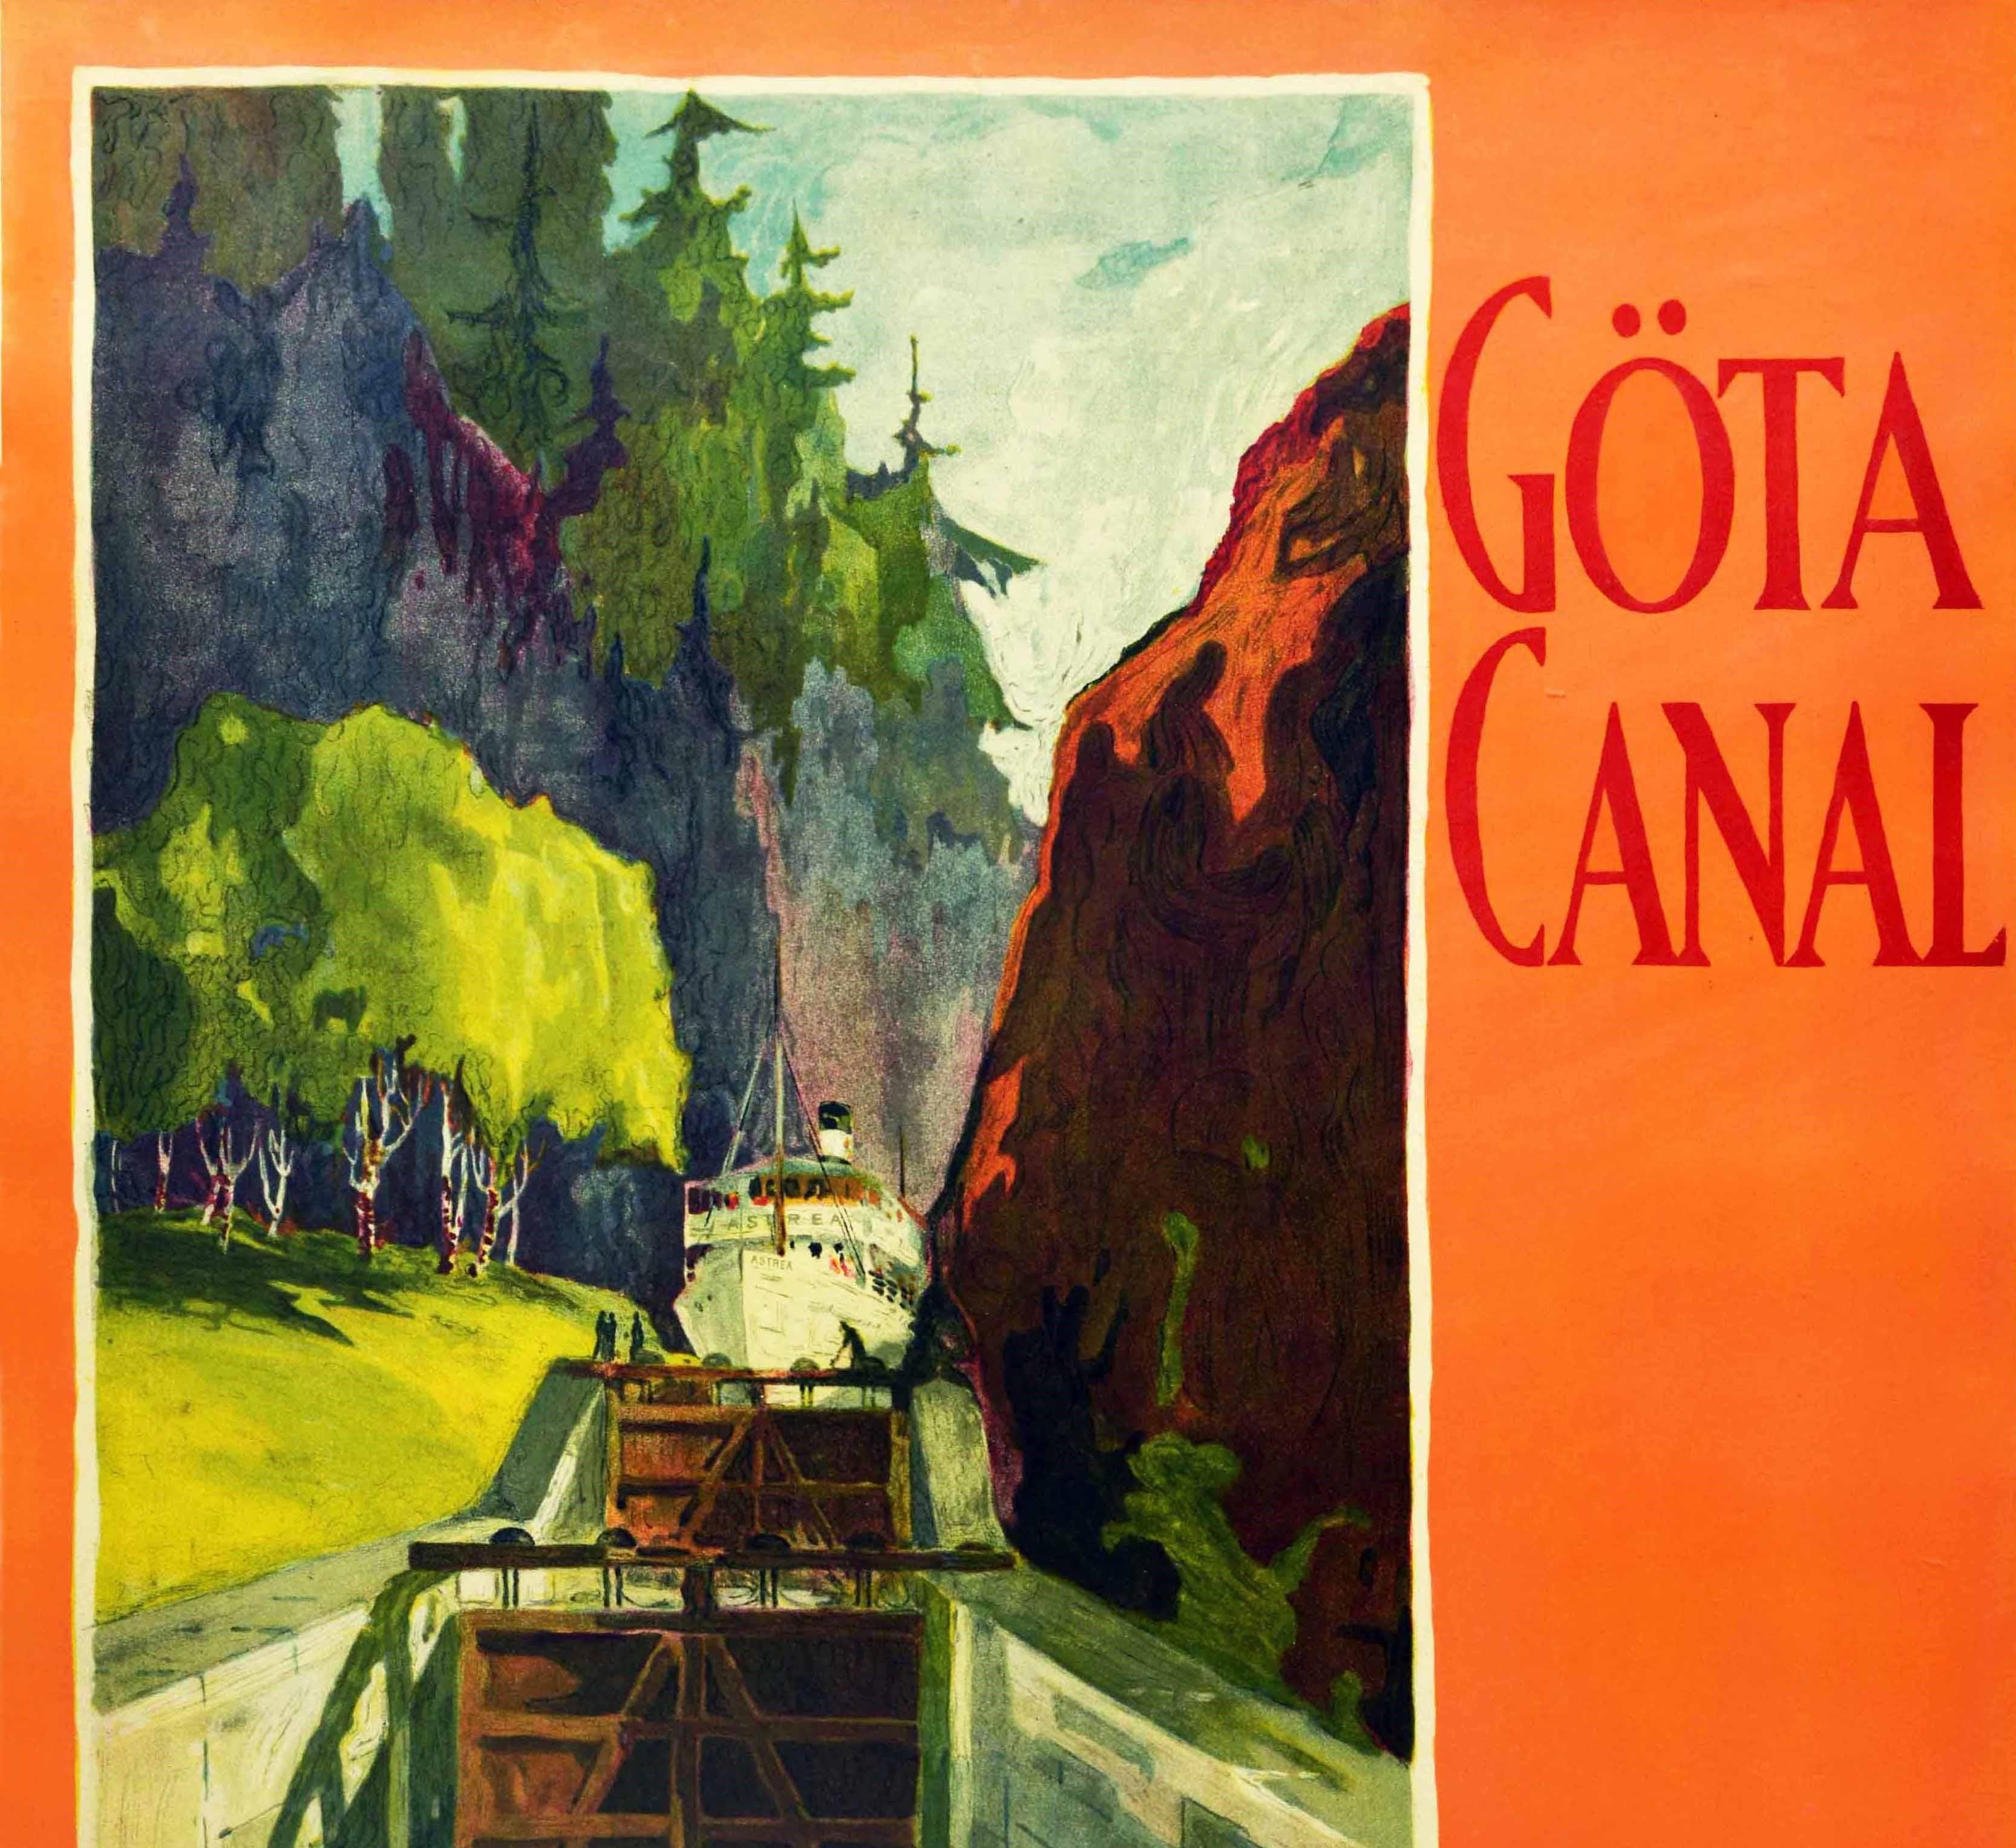 Original Vintage Poster Gota Canal Cruise Through Fairyland Sweden Sailing Art - Print by Hj. Thoresson